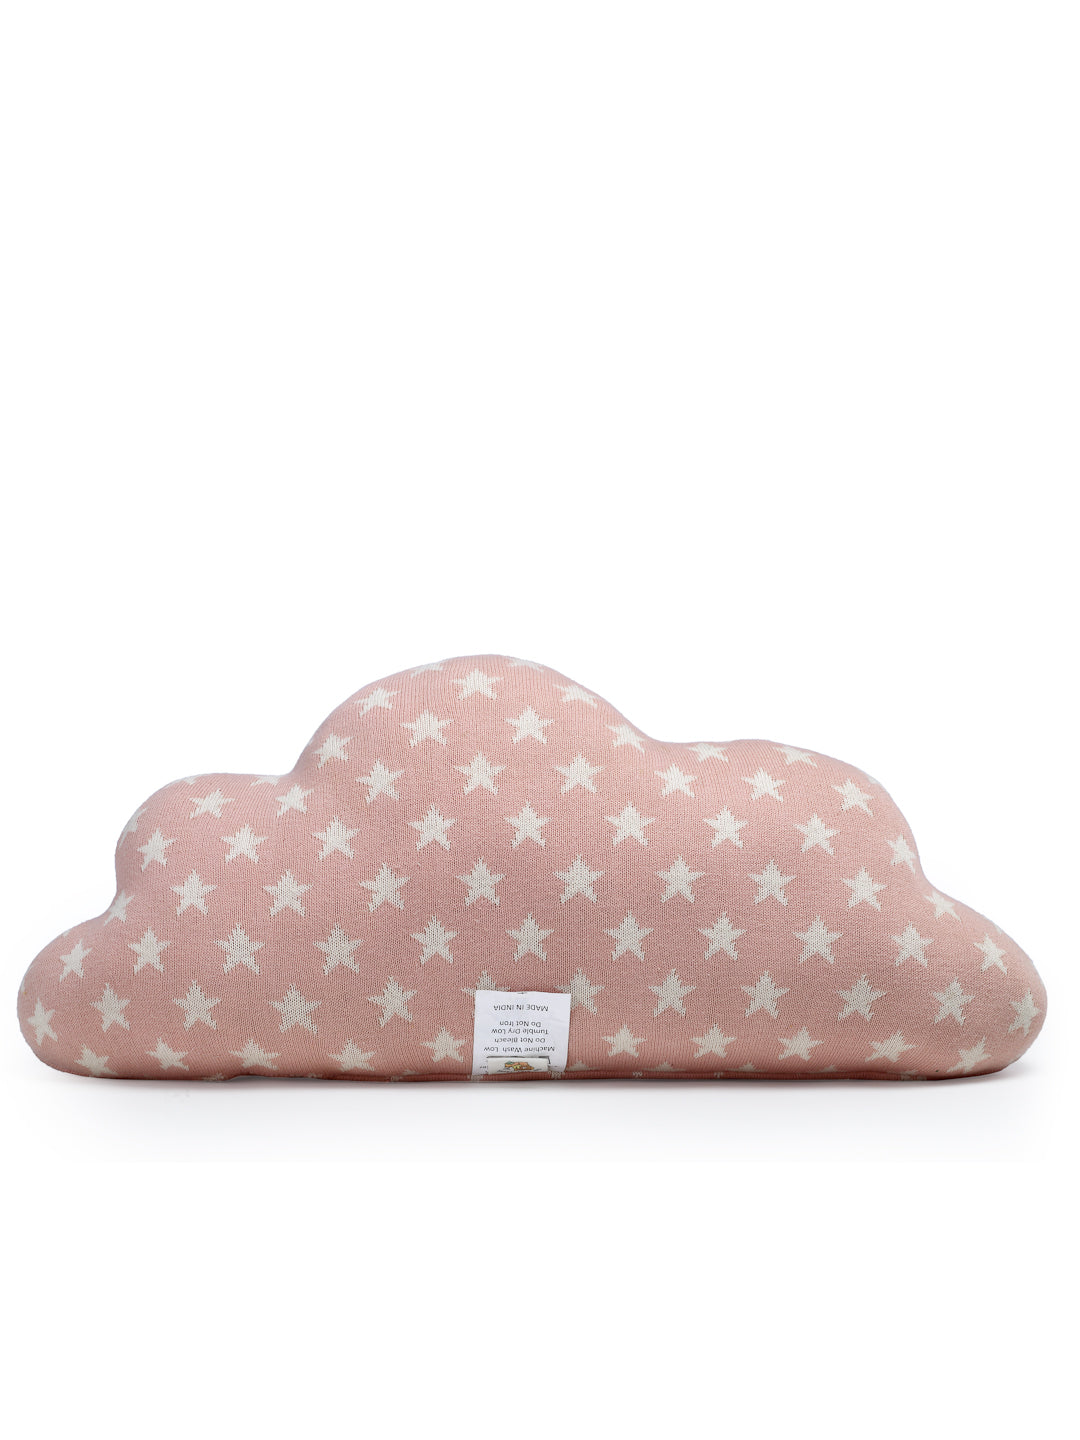 Baby Cloud Pillow